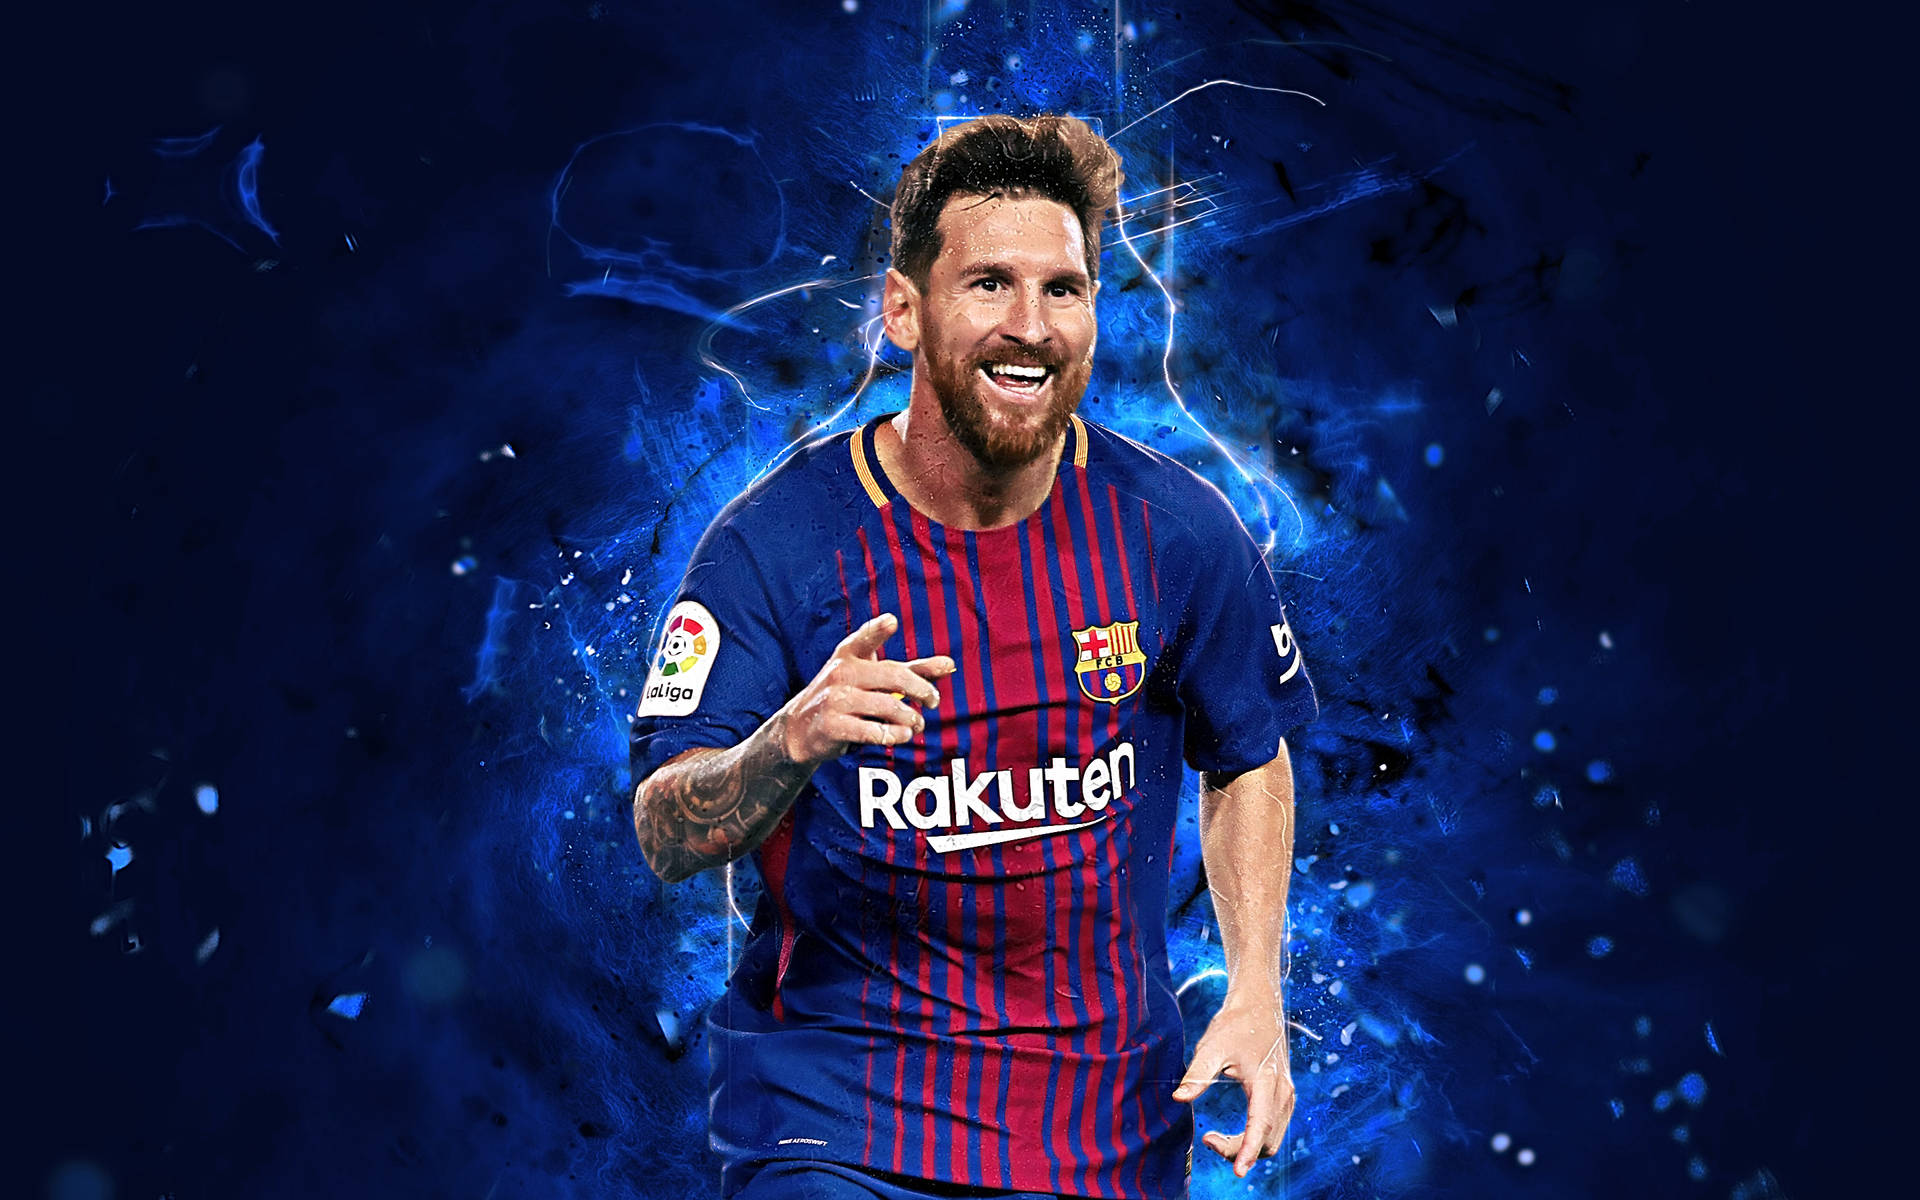 Smiling Lionel Messi 2020 Wallpaper